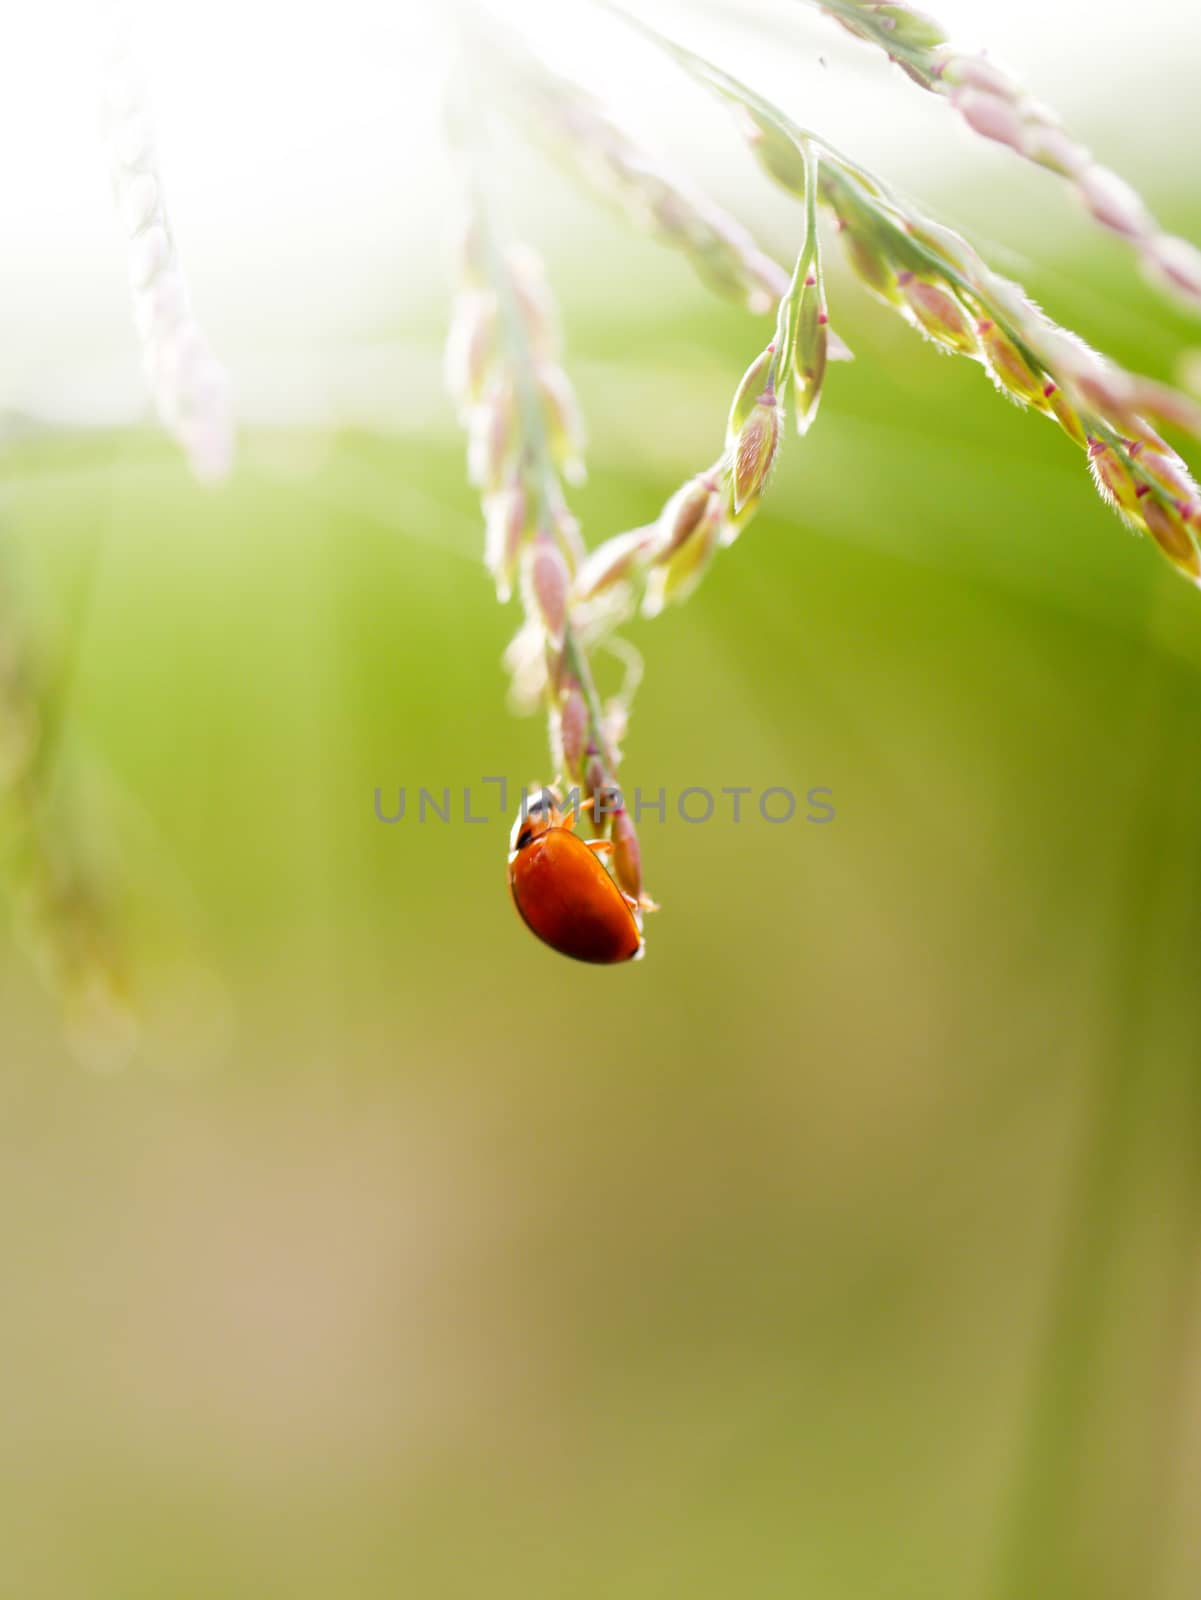 Ladybug on green grass by Noppharat_th